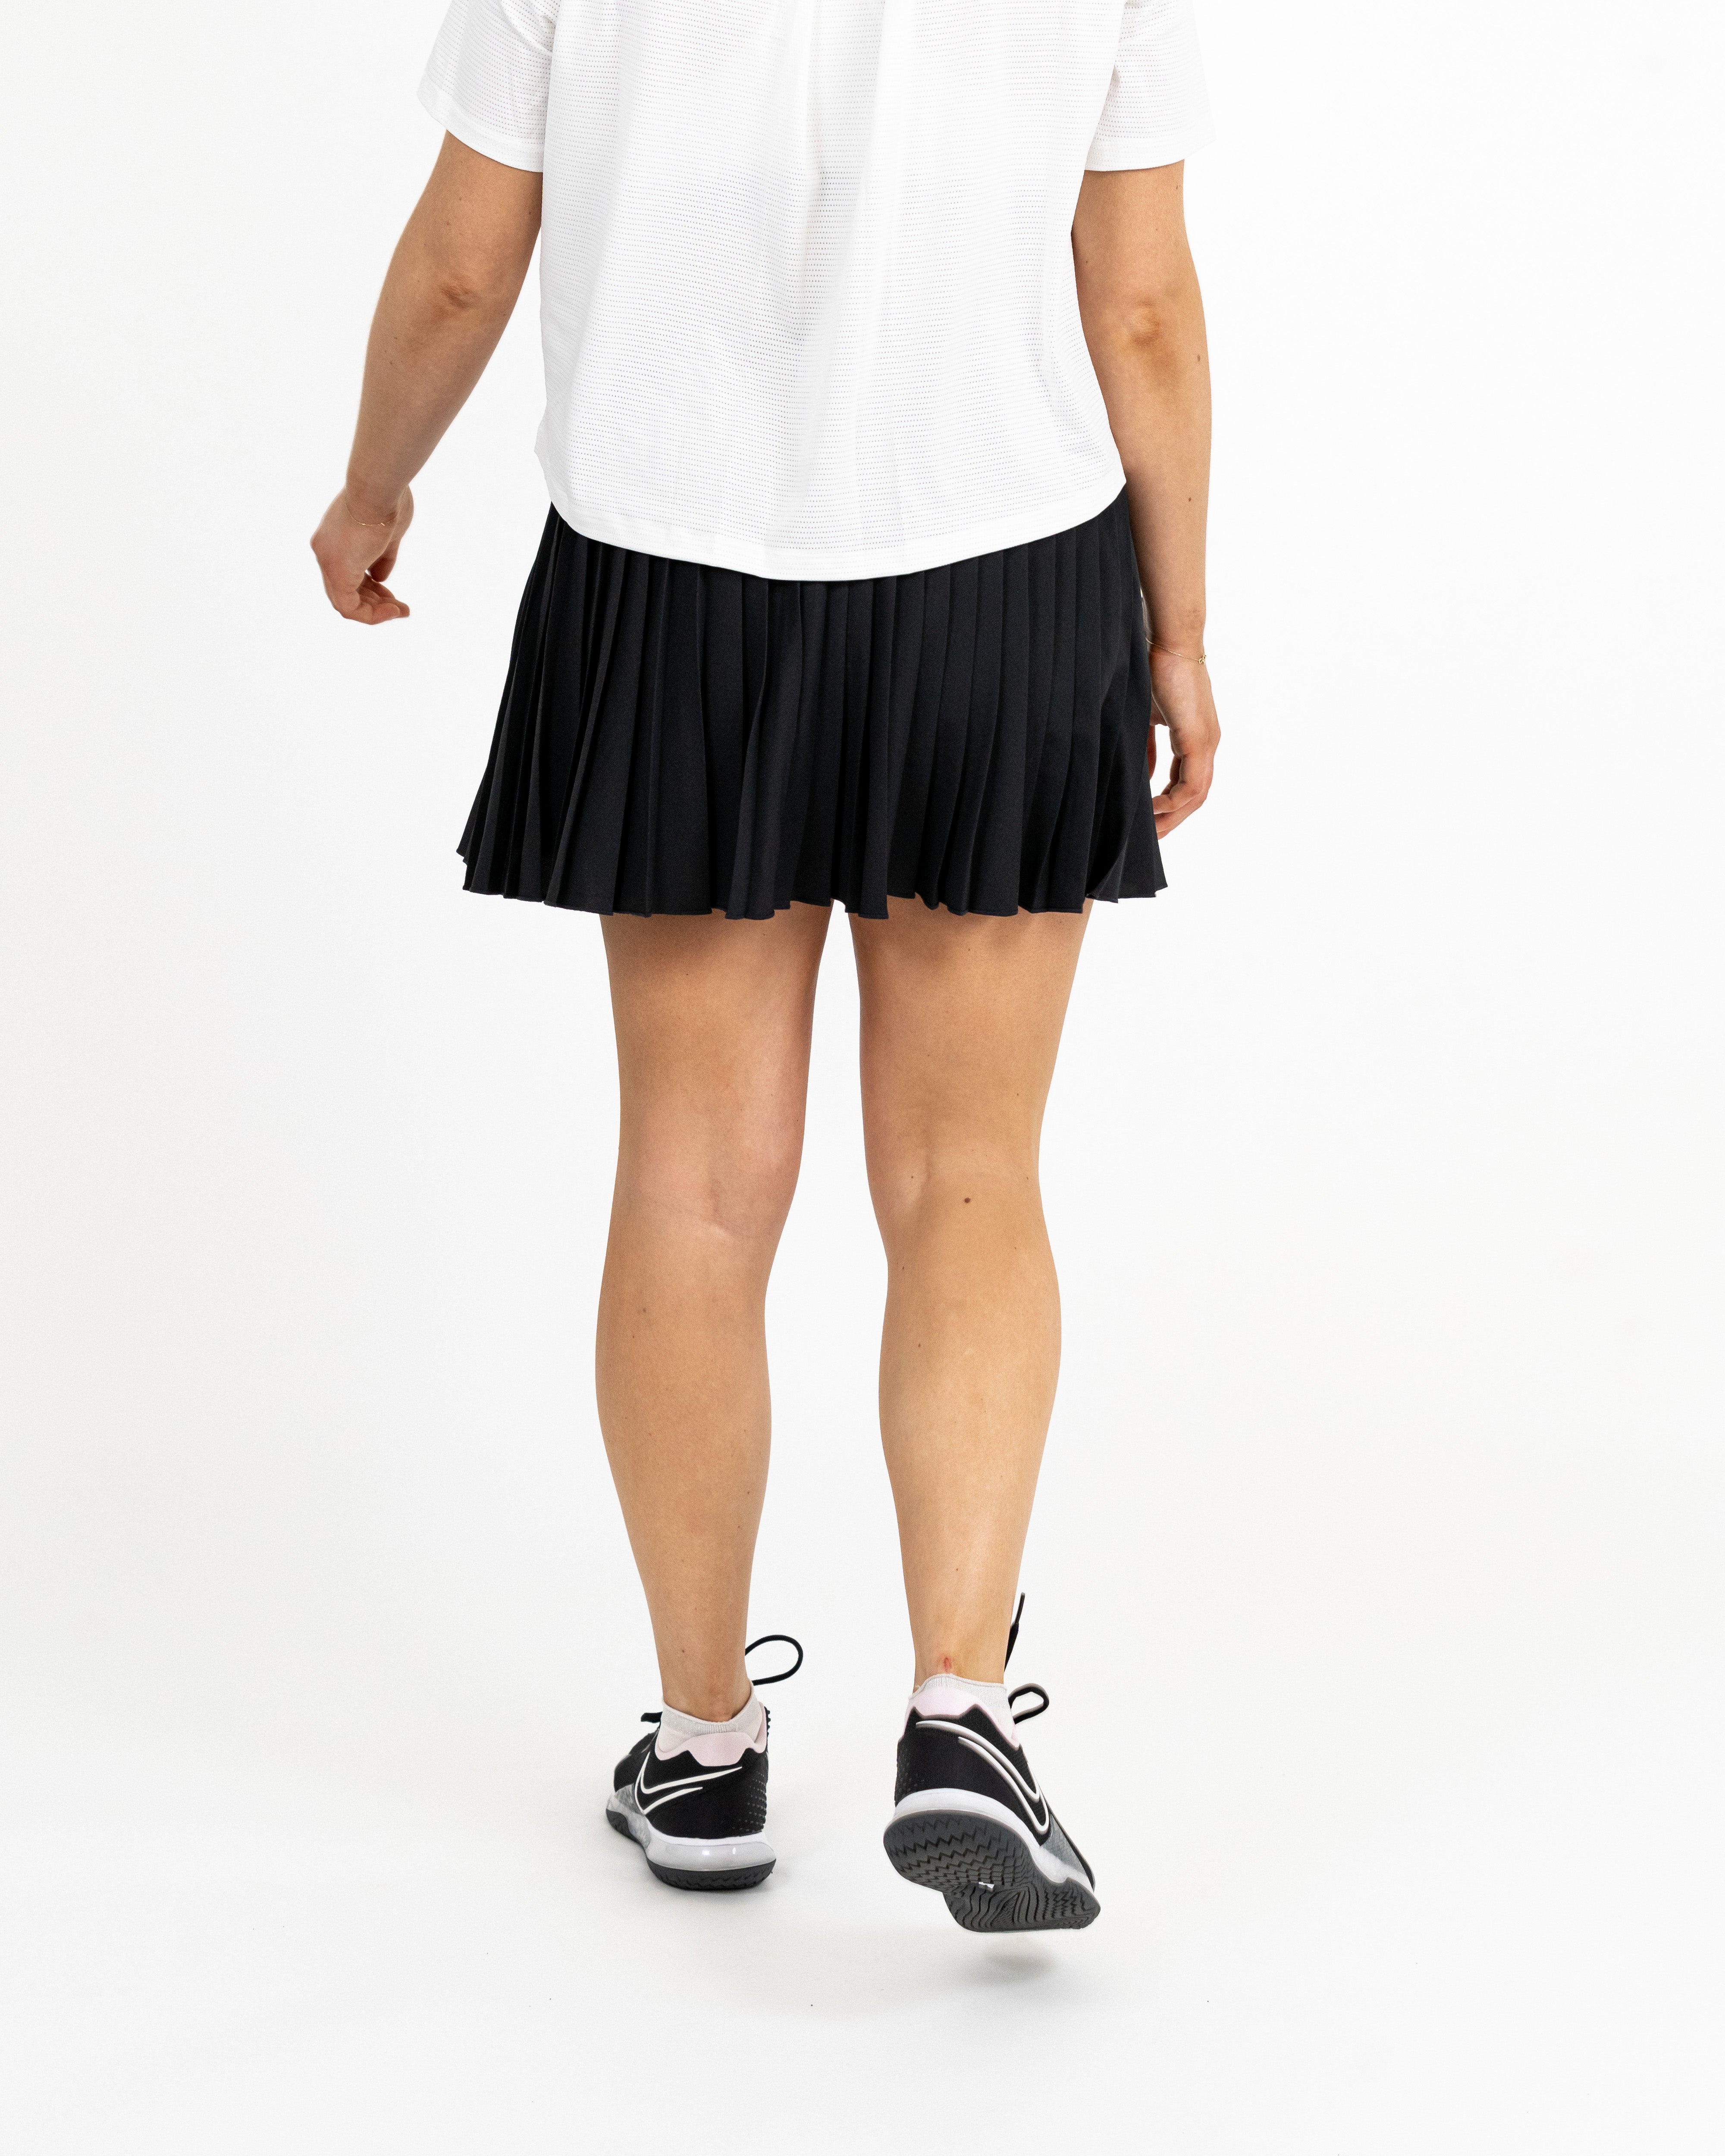 NikeCourt Victory Skirt - "Long"